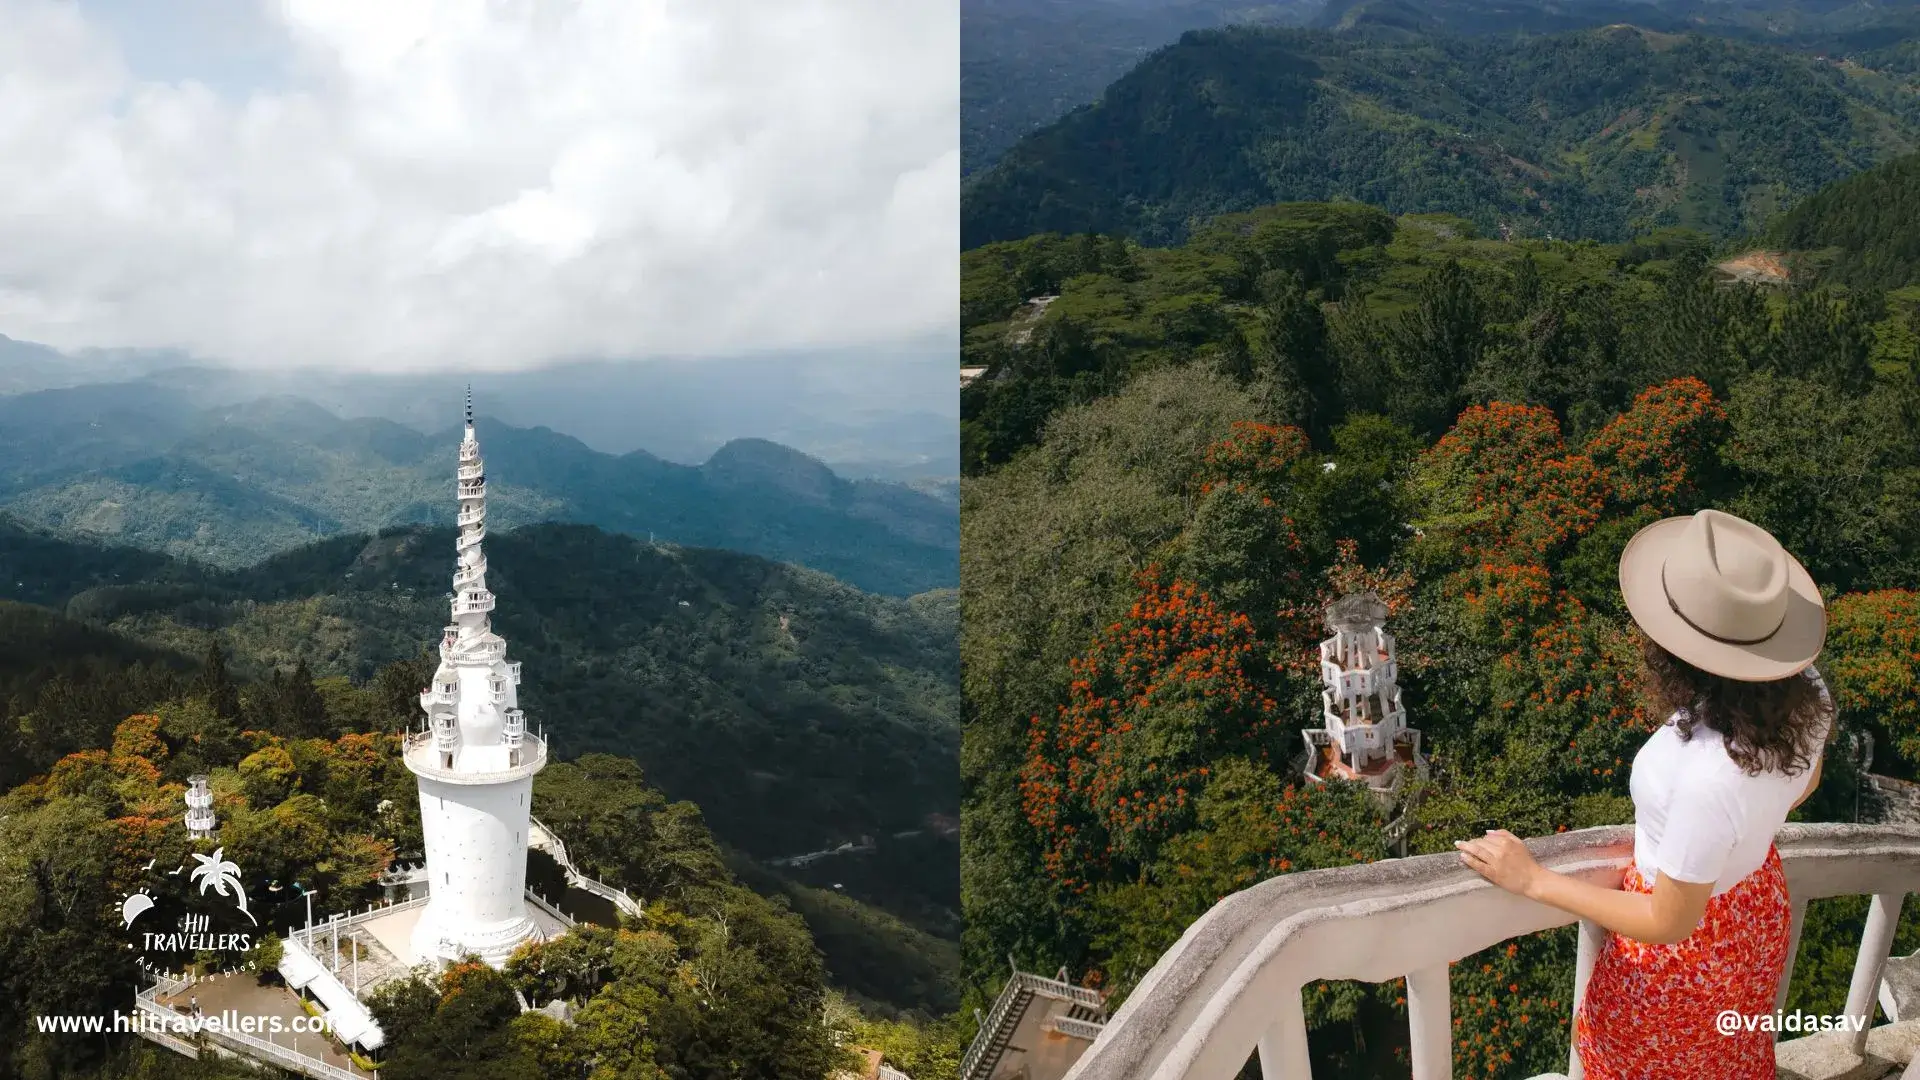 Kondagala Hike and Loolkandura Tea Estate: A Serene Escape to Sri Lanka's Hill Country